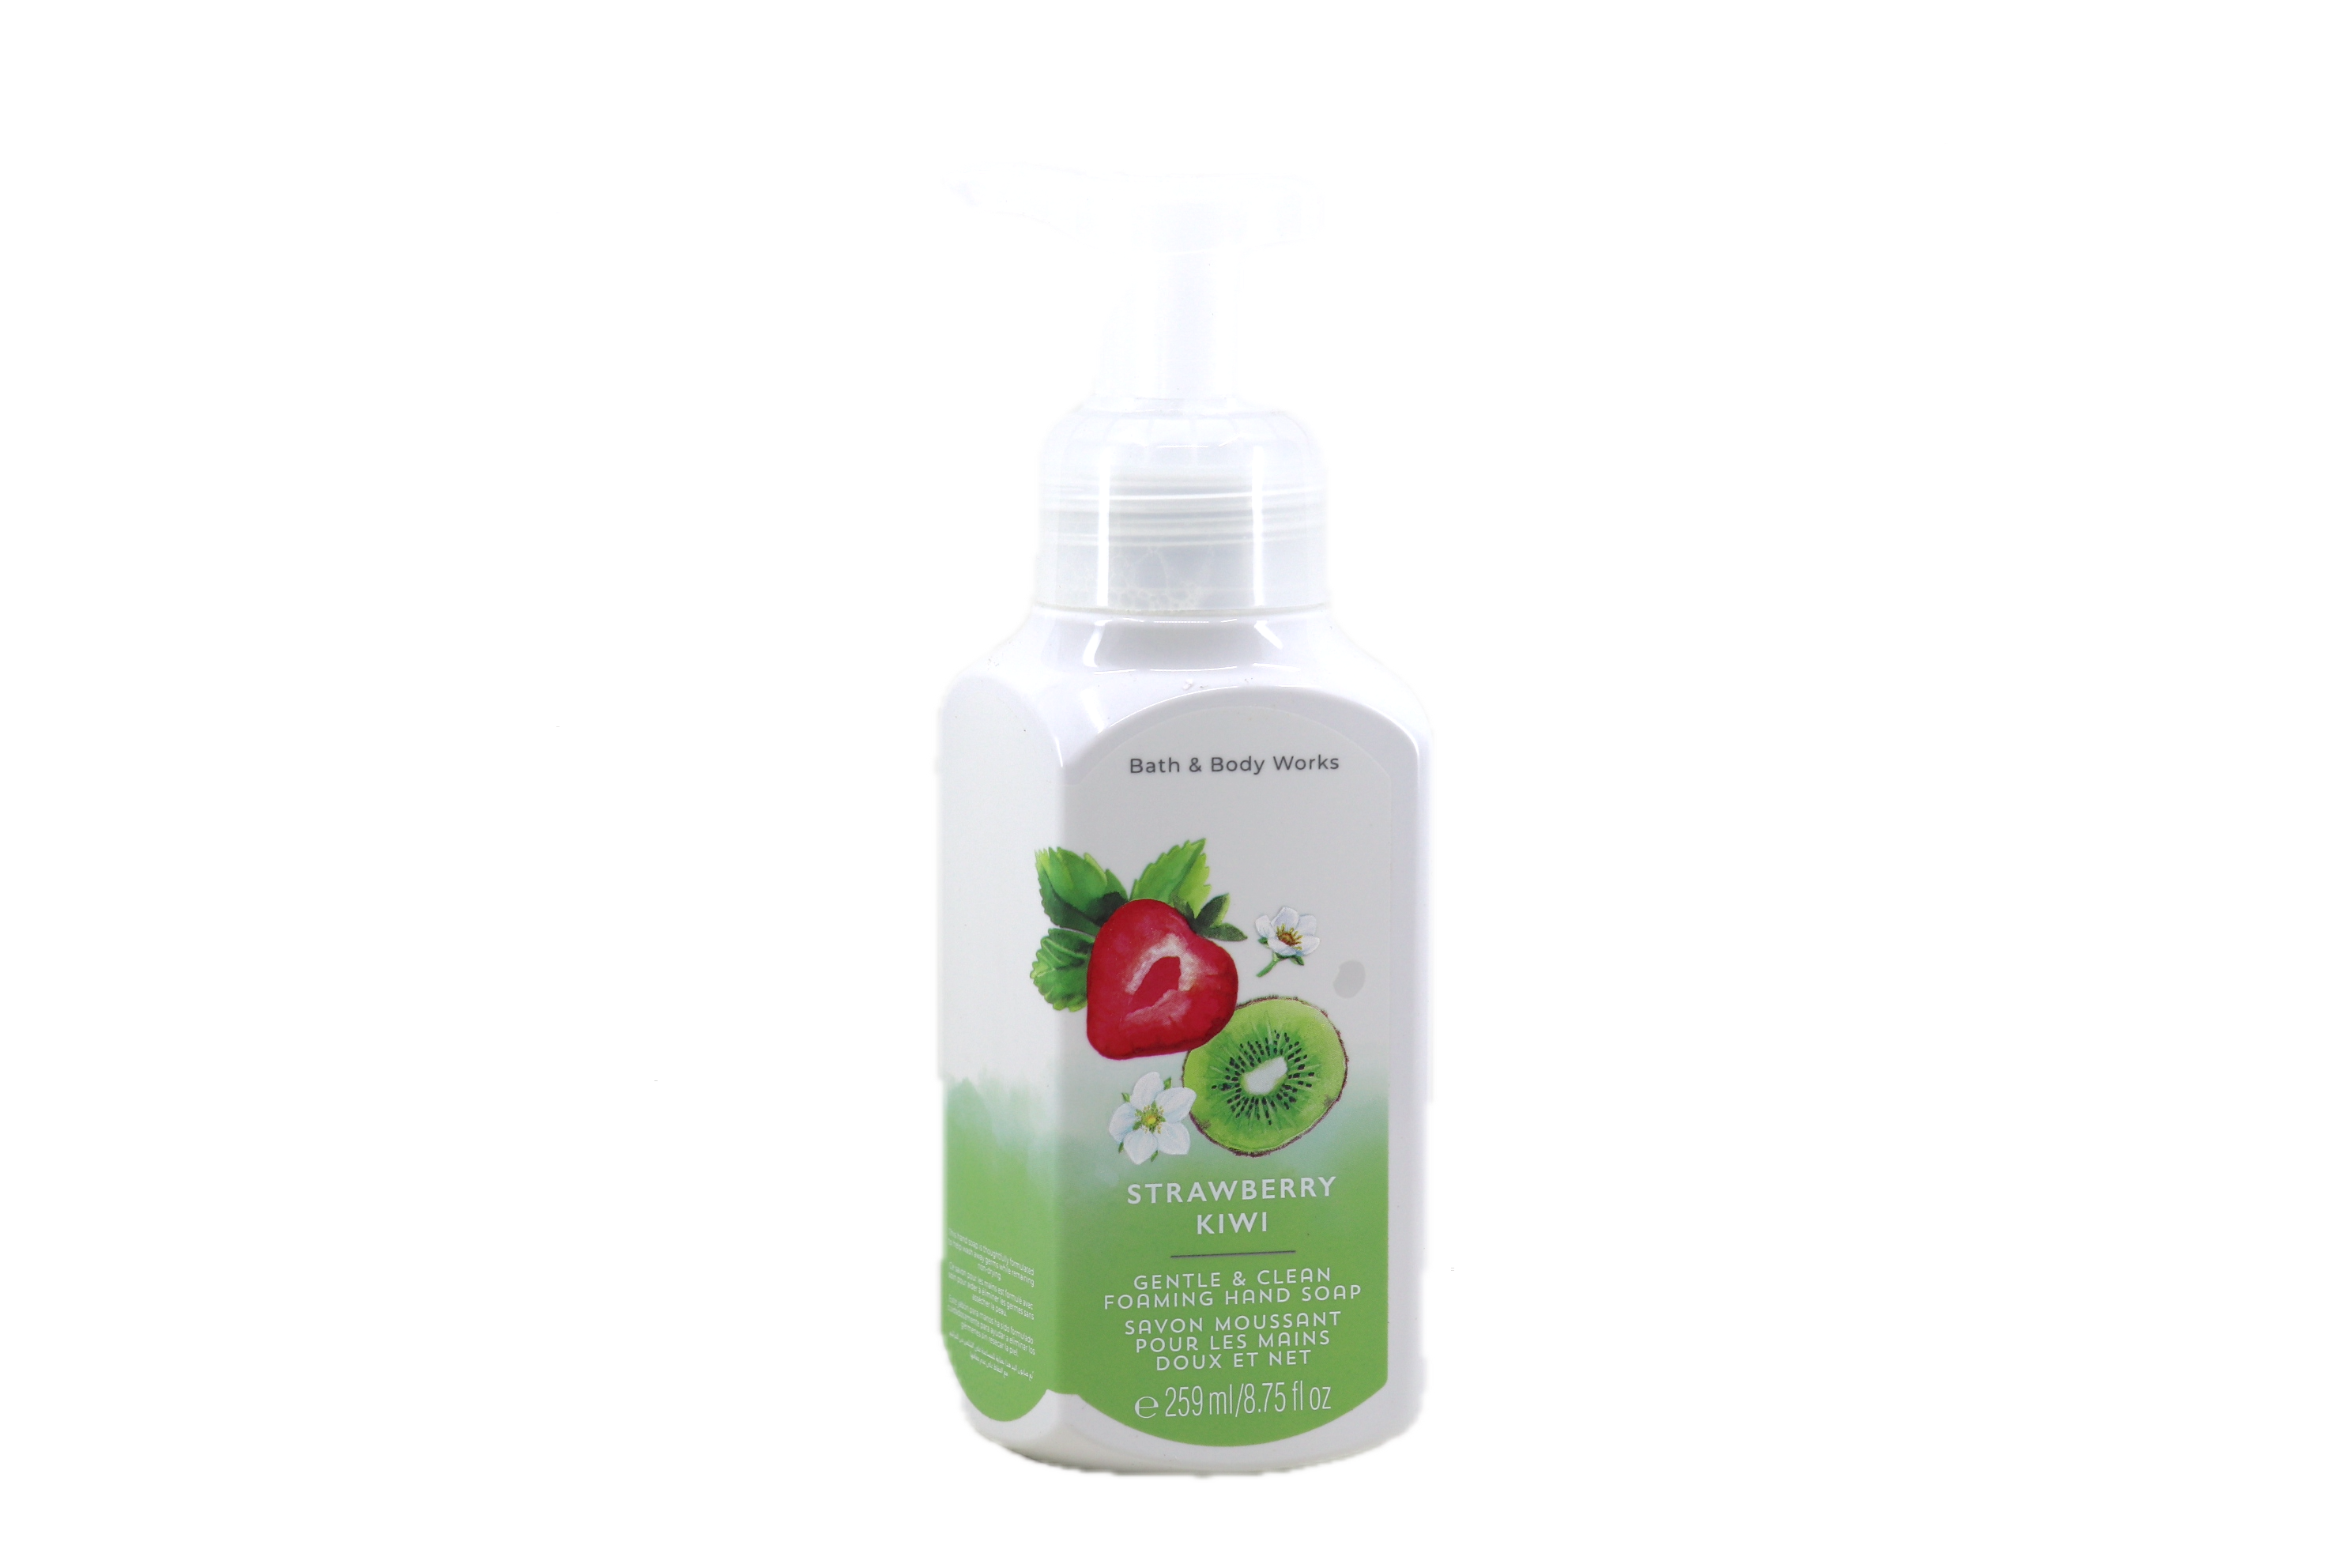 Bath & Body Works Strawberry Kiwi Gentle Foaming Hand Soap